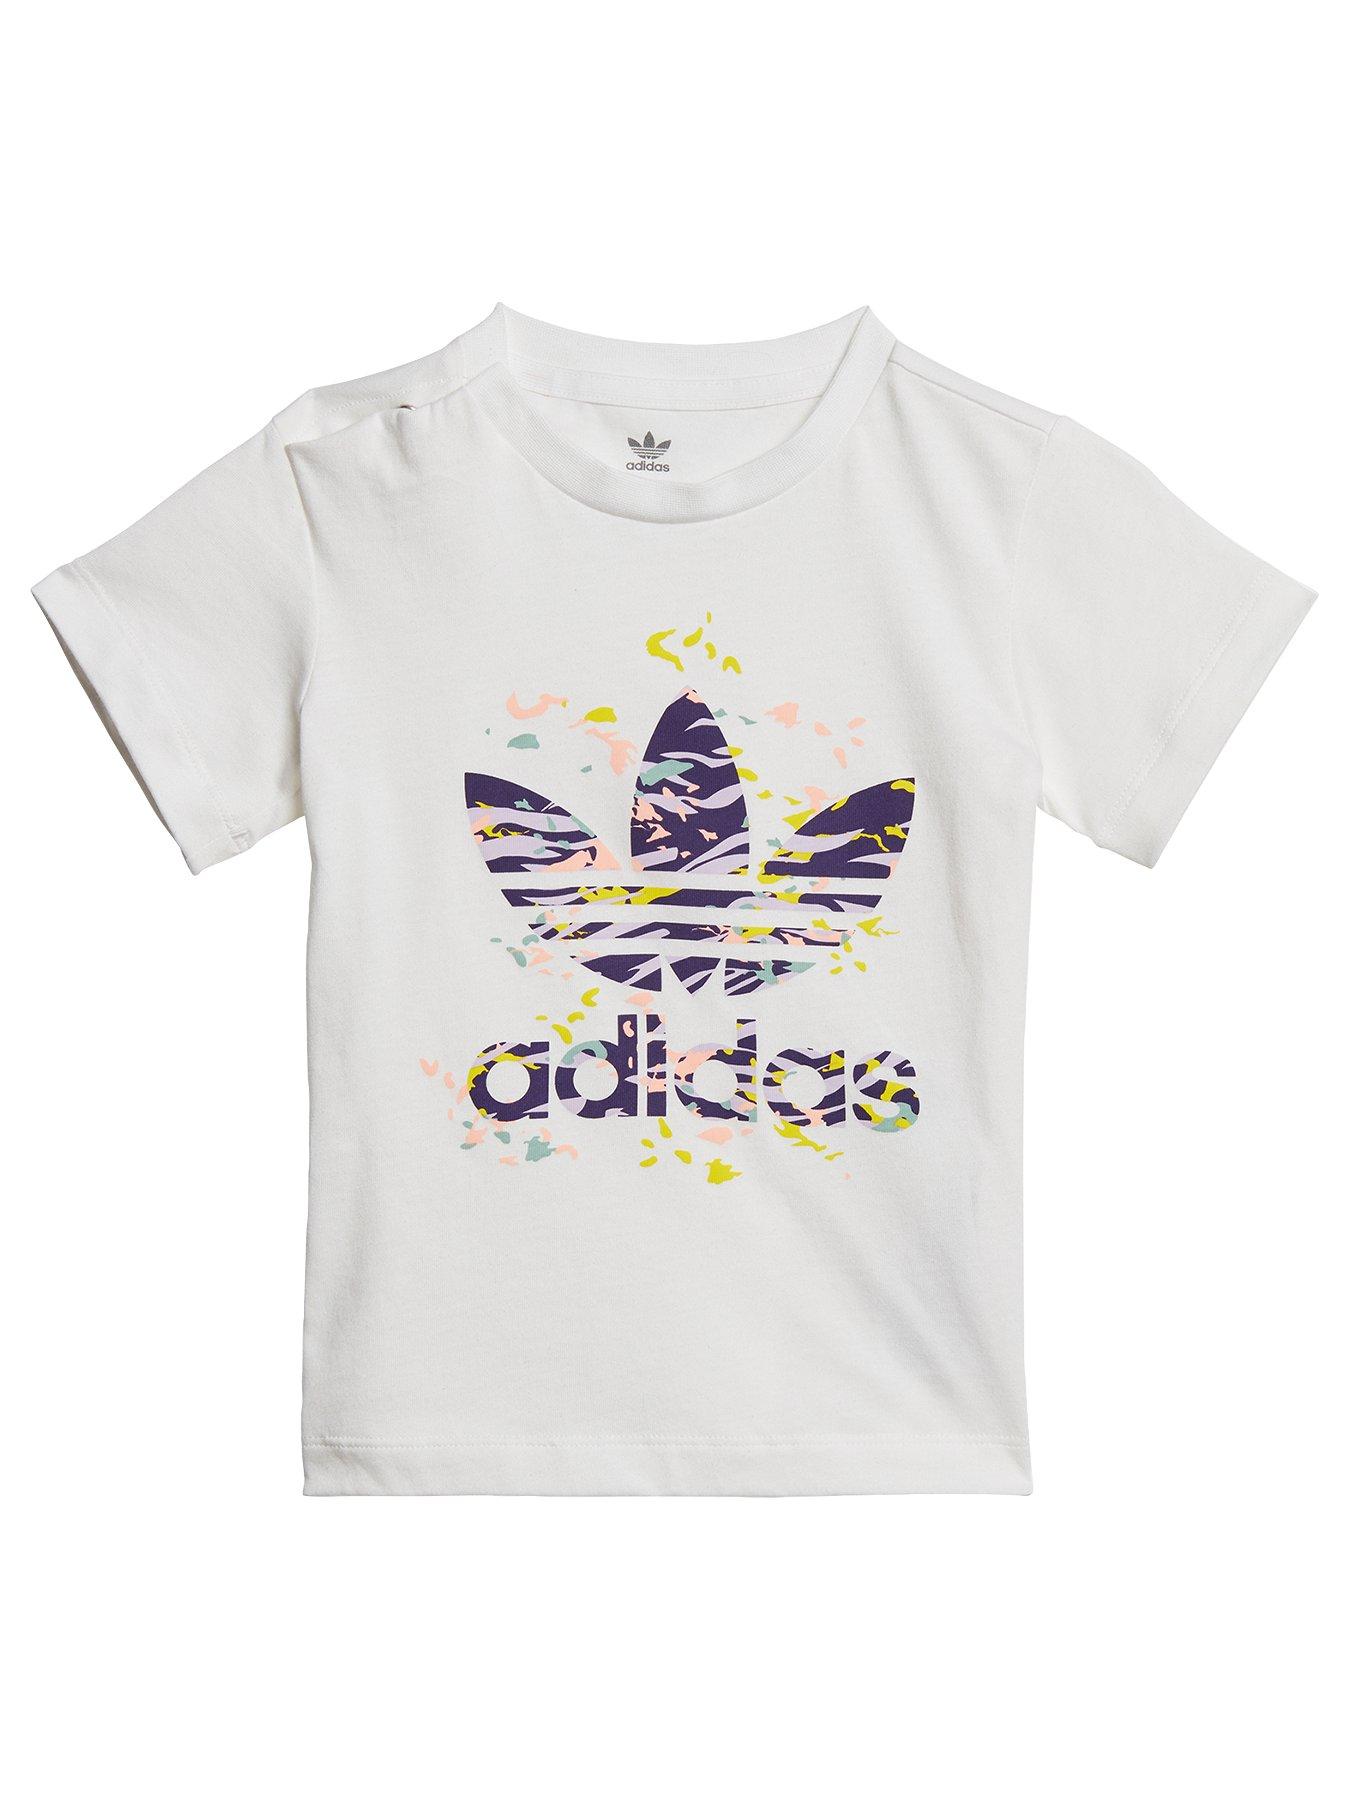 0/3 months | Adidas | T-shirts \u0026 polos | Boys clothes | Child \u0026 baby |  www.very.co.uk